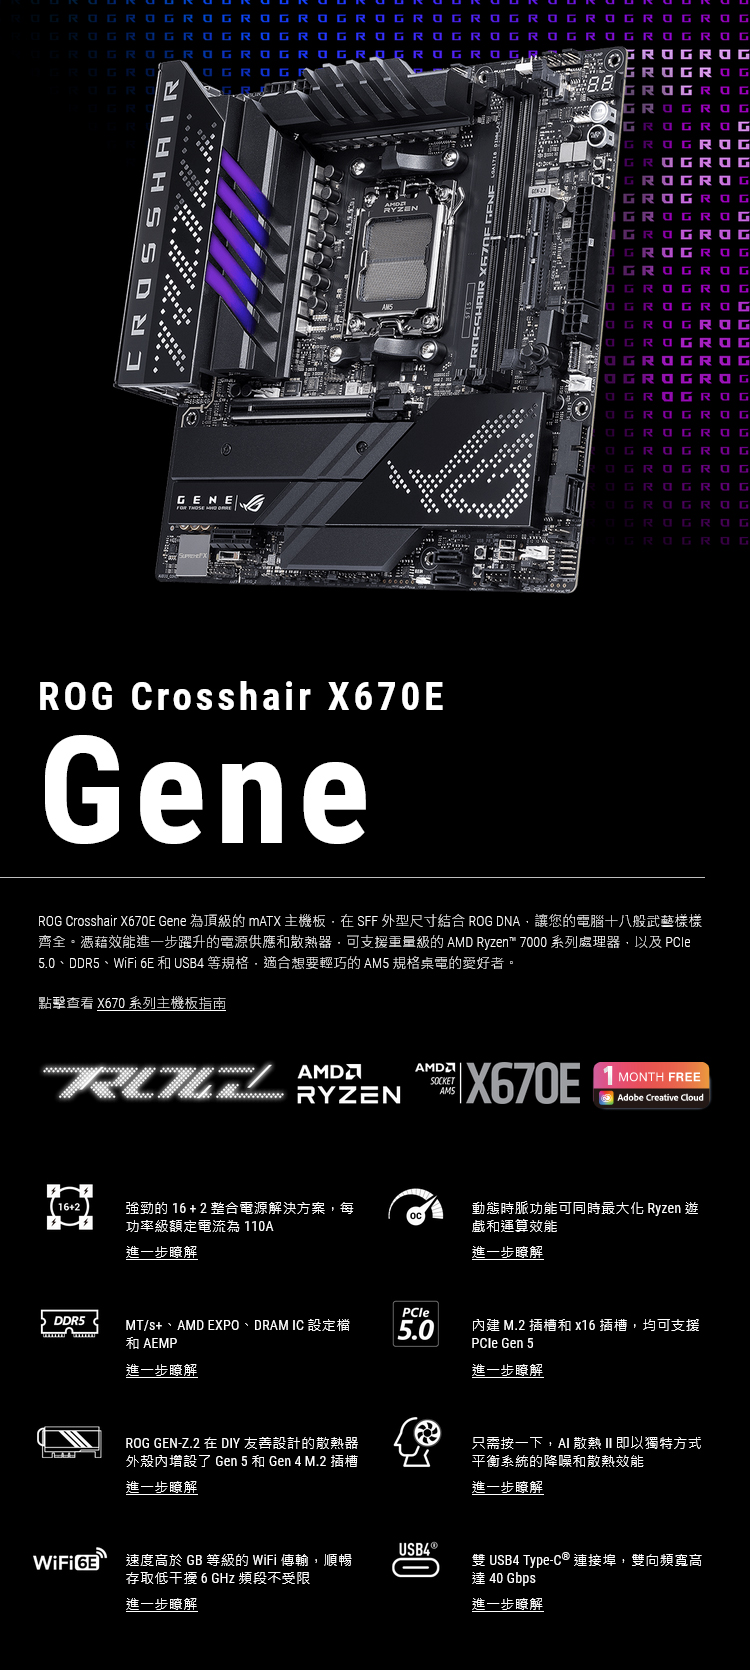 ASUS 華碩】ROG CROSSHAIR X670E GENE 主機板- 三井3C購物網- 行動版-